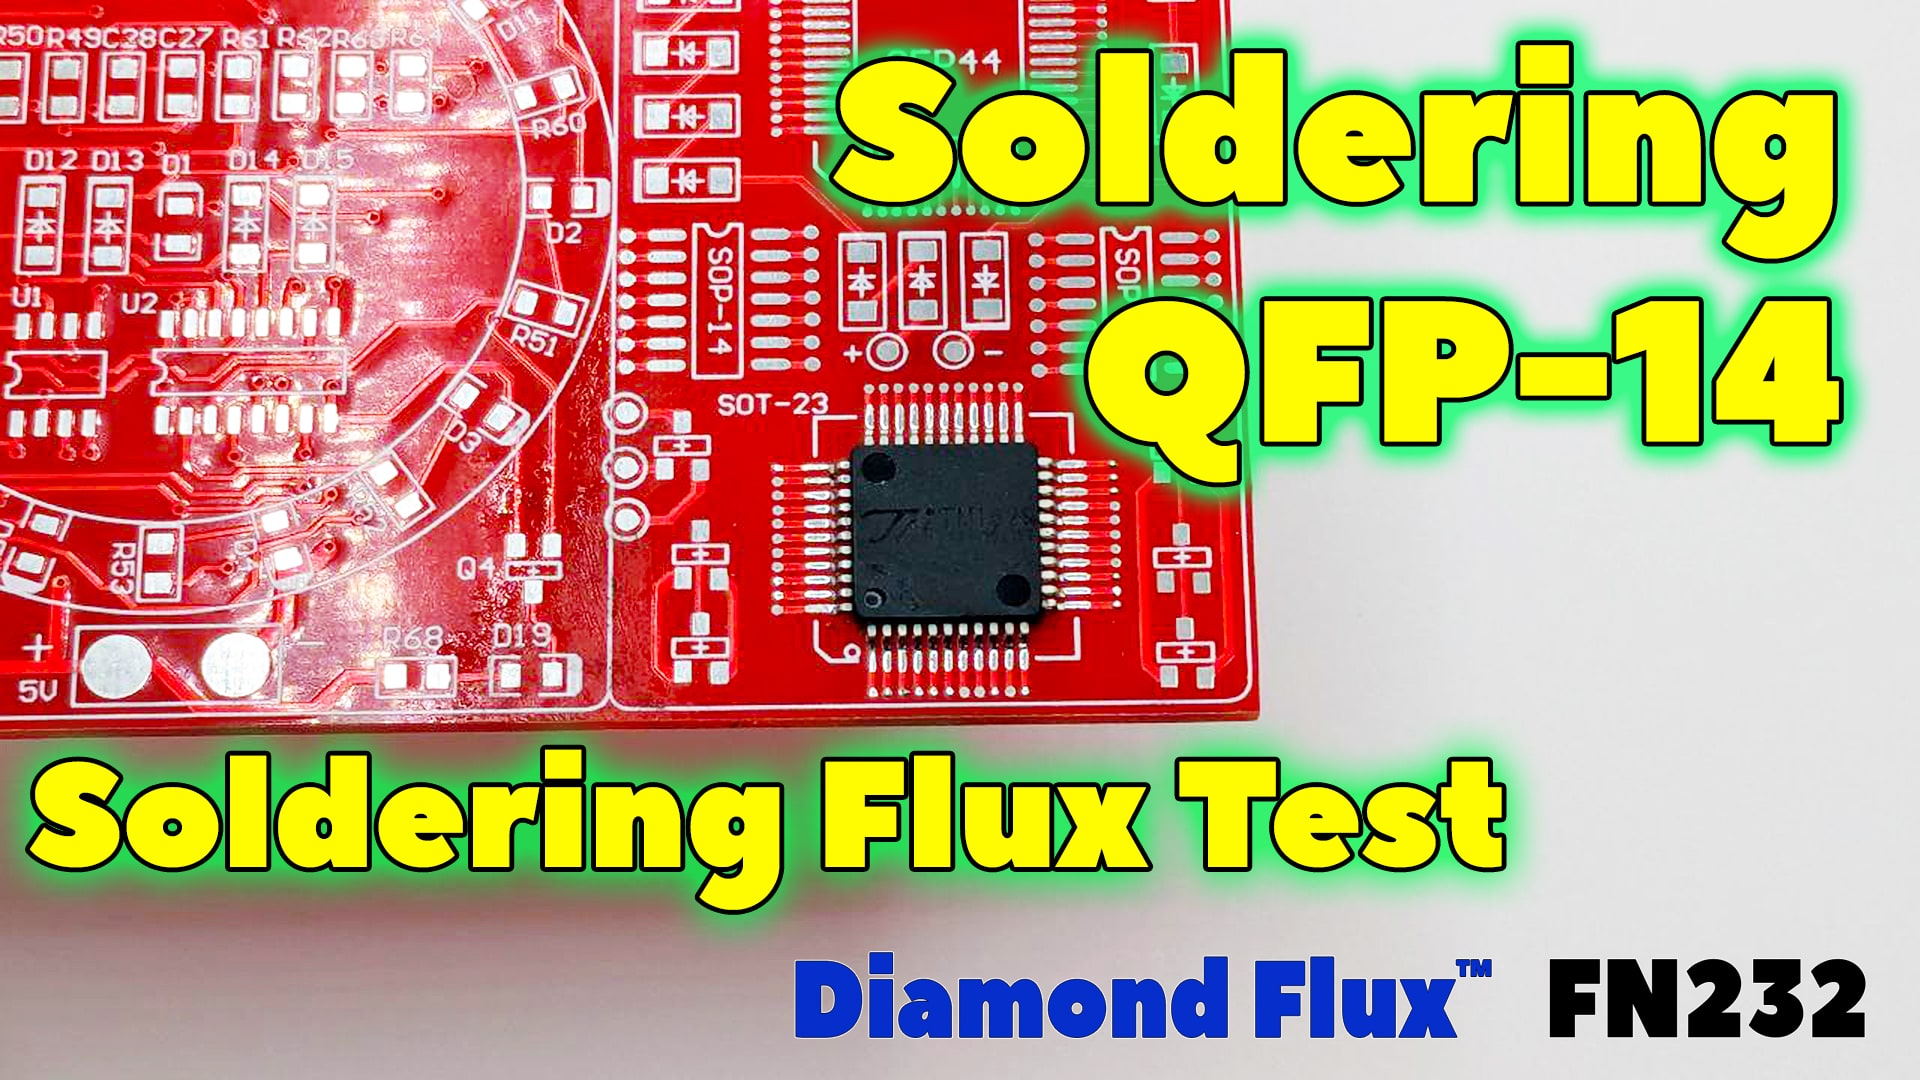 liquid soldering flux for electronics wires